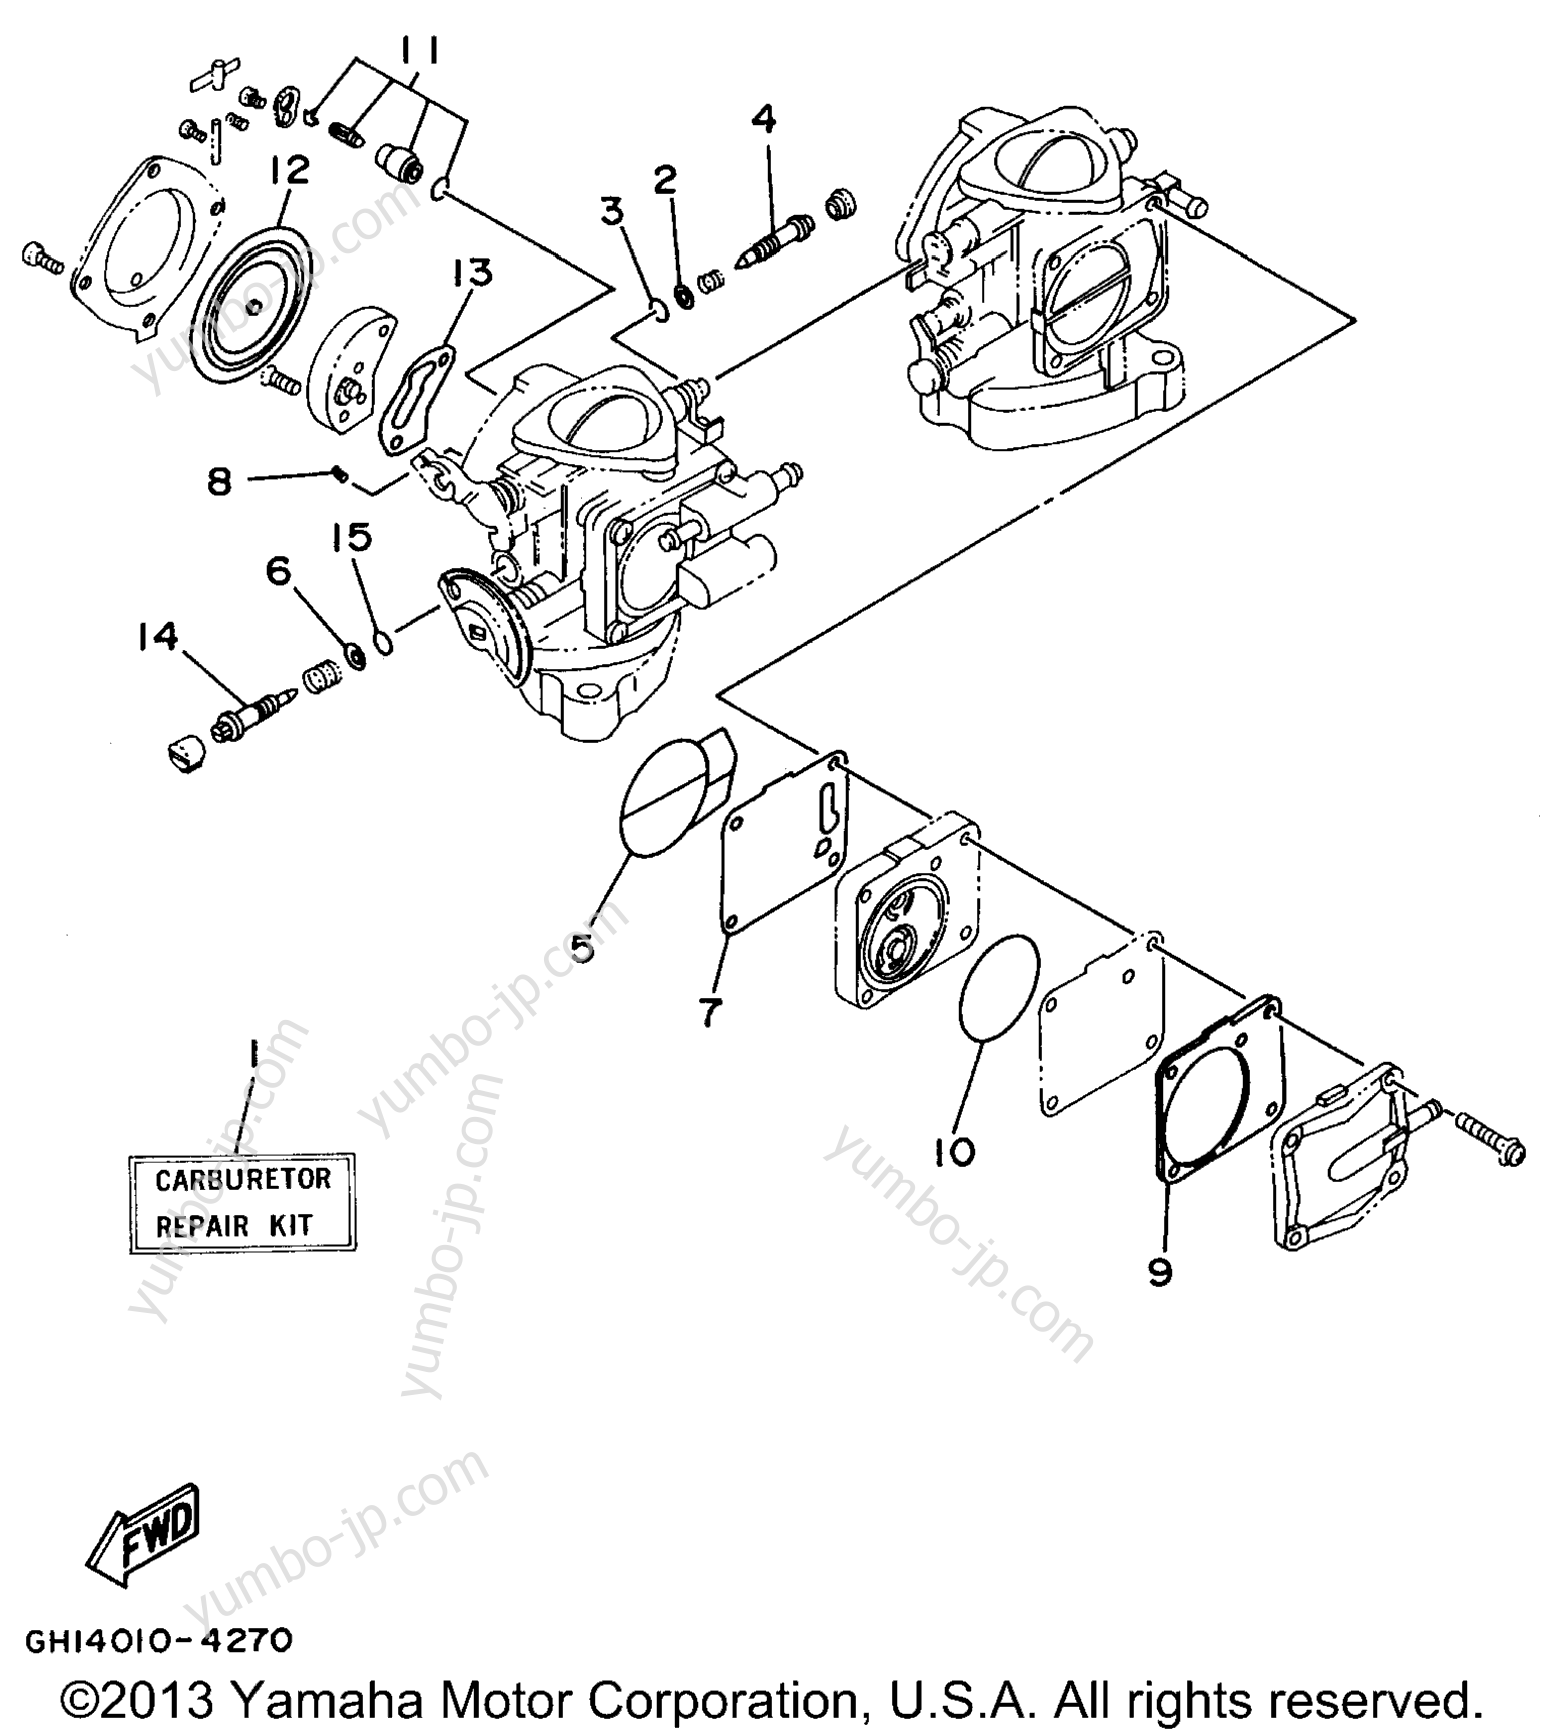 Repair Kit 2 для гидроциклов YAMAHA WAVE VENTURE (WVT700T) 1995 г.